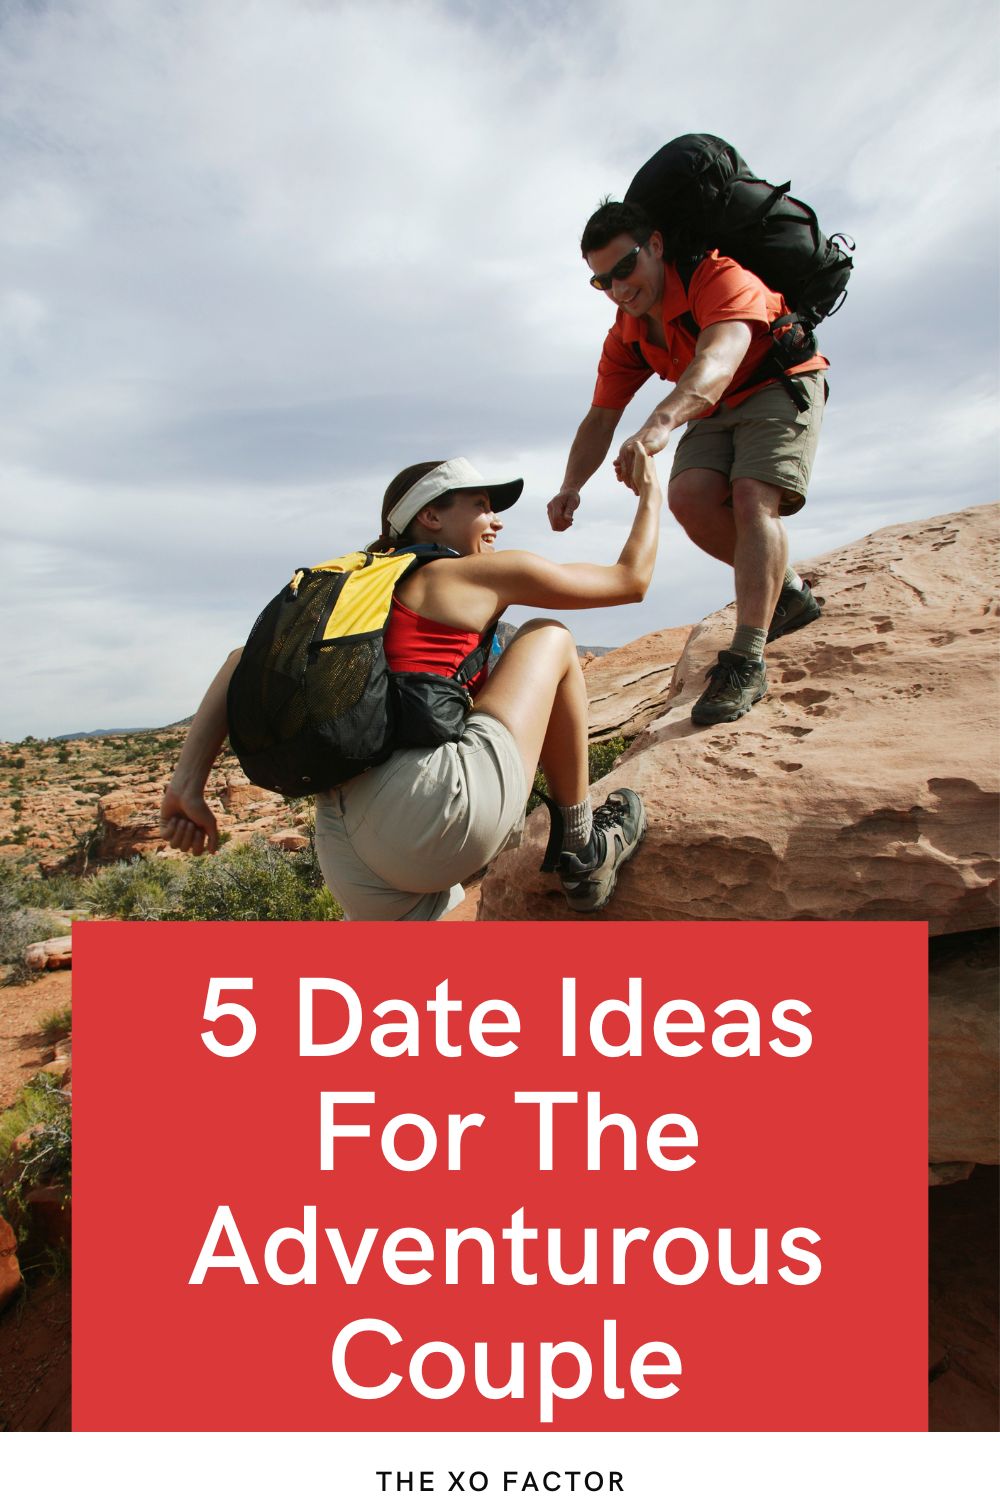 5 Date Ideas For The Adventurous Couple